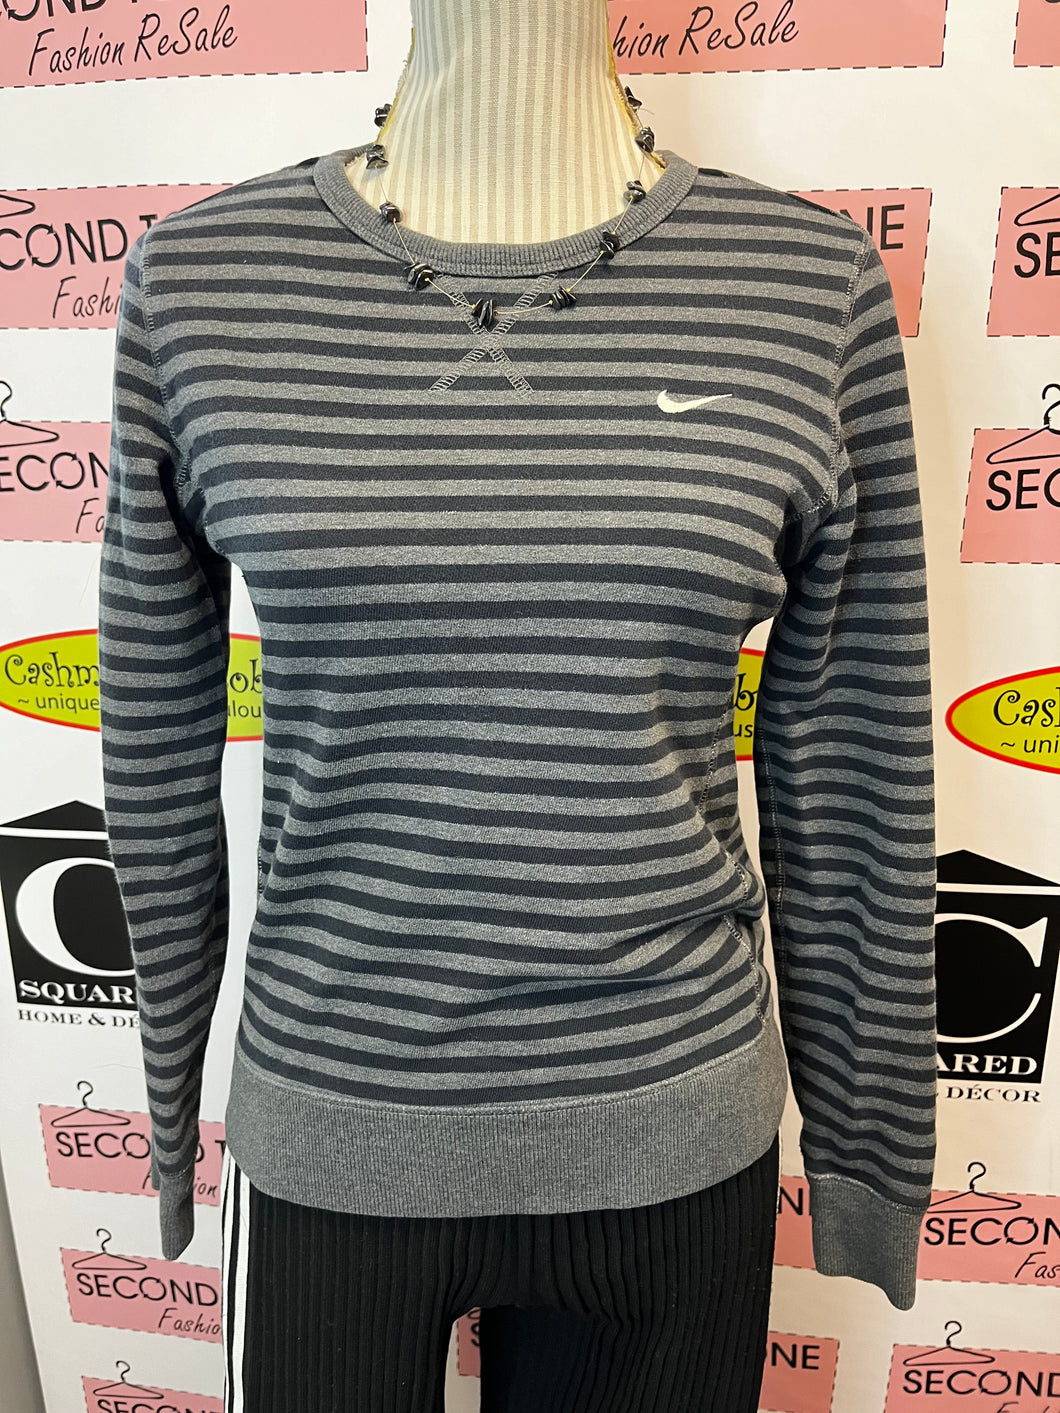 Nike Striped Sweater (Size M)